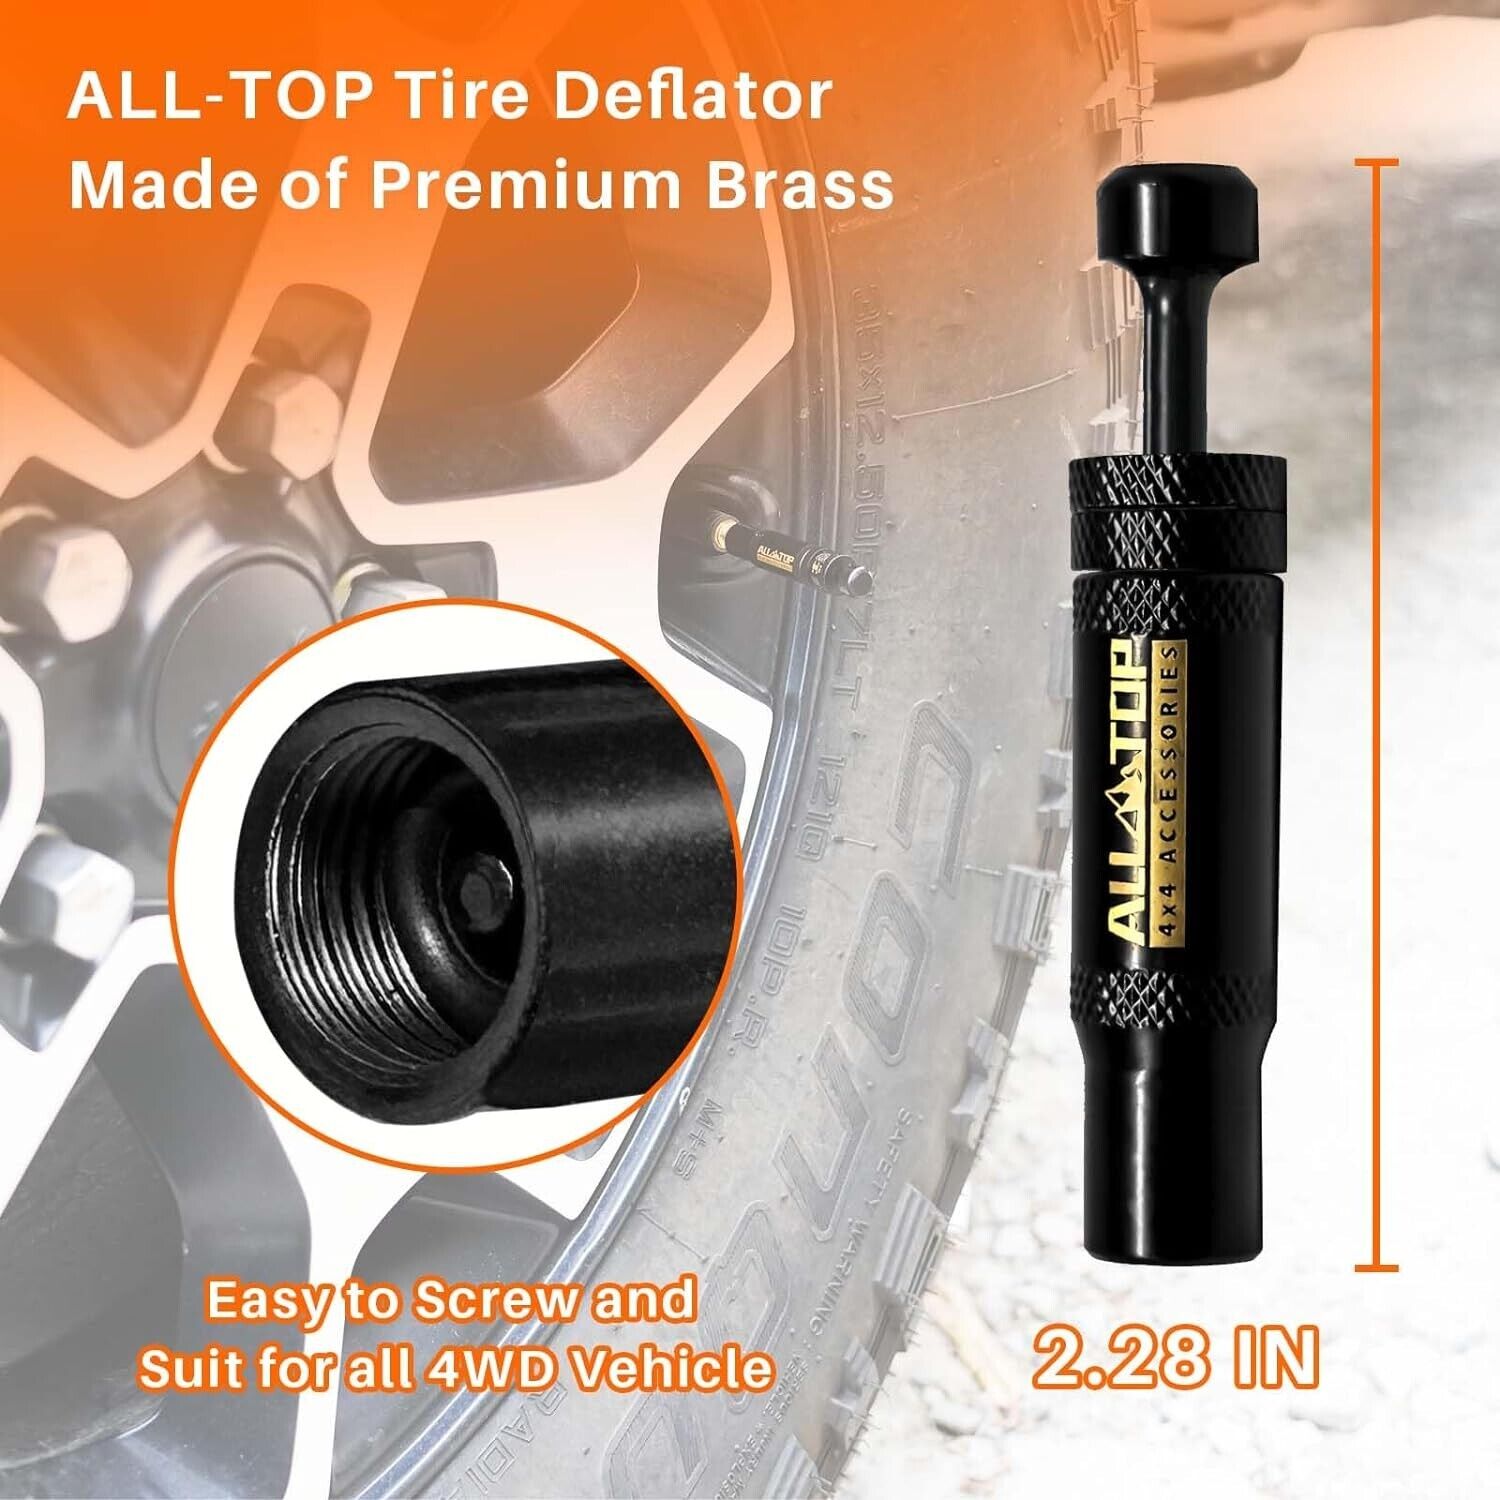 All-Top Adjustable Auto-Stop Tire Deflator Valve Kit (10-30 PSI) 4